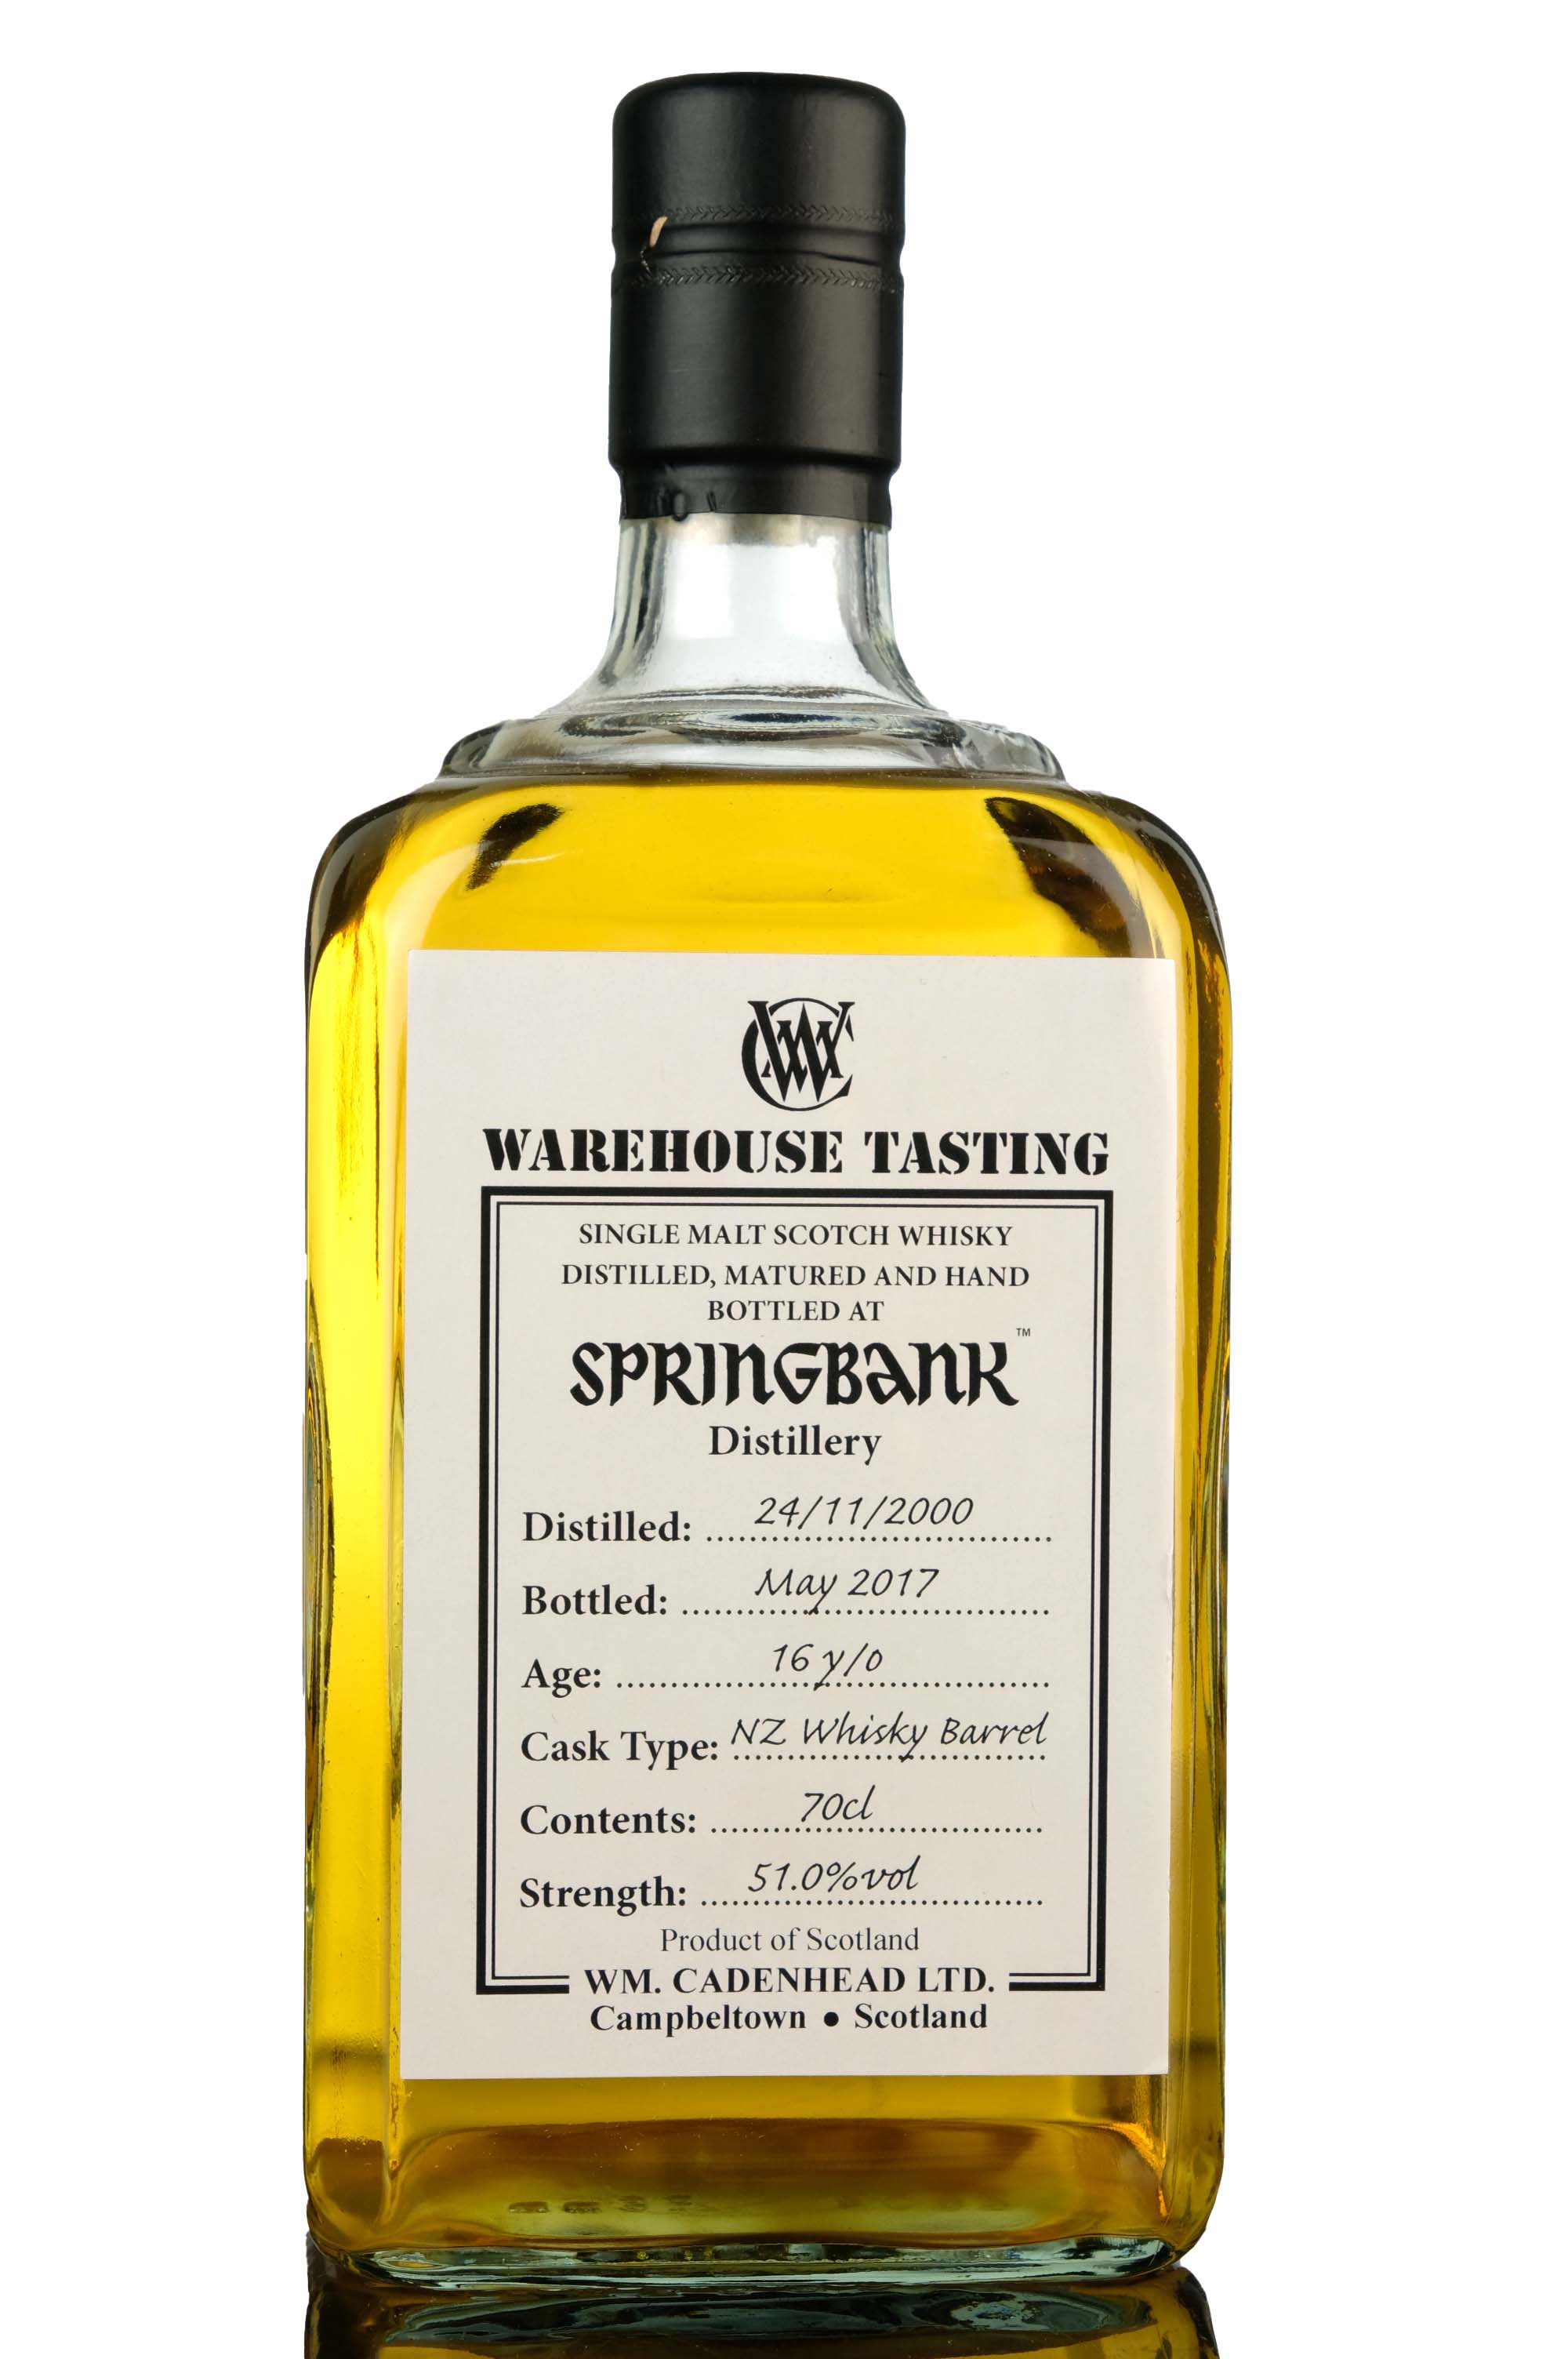 Springbank 2000-2017 - 16 Year Old - Cadenheads Warehouse Tasting